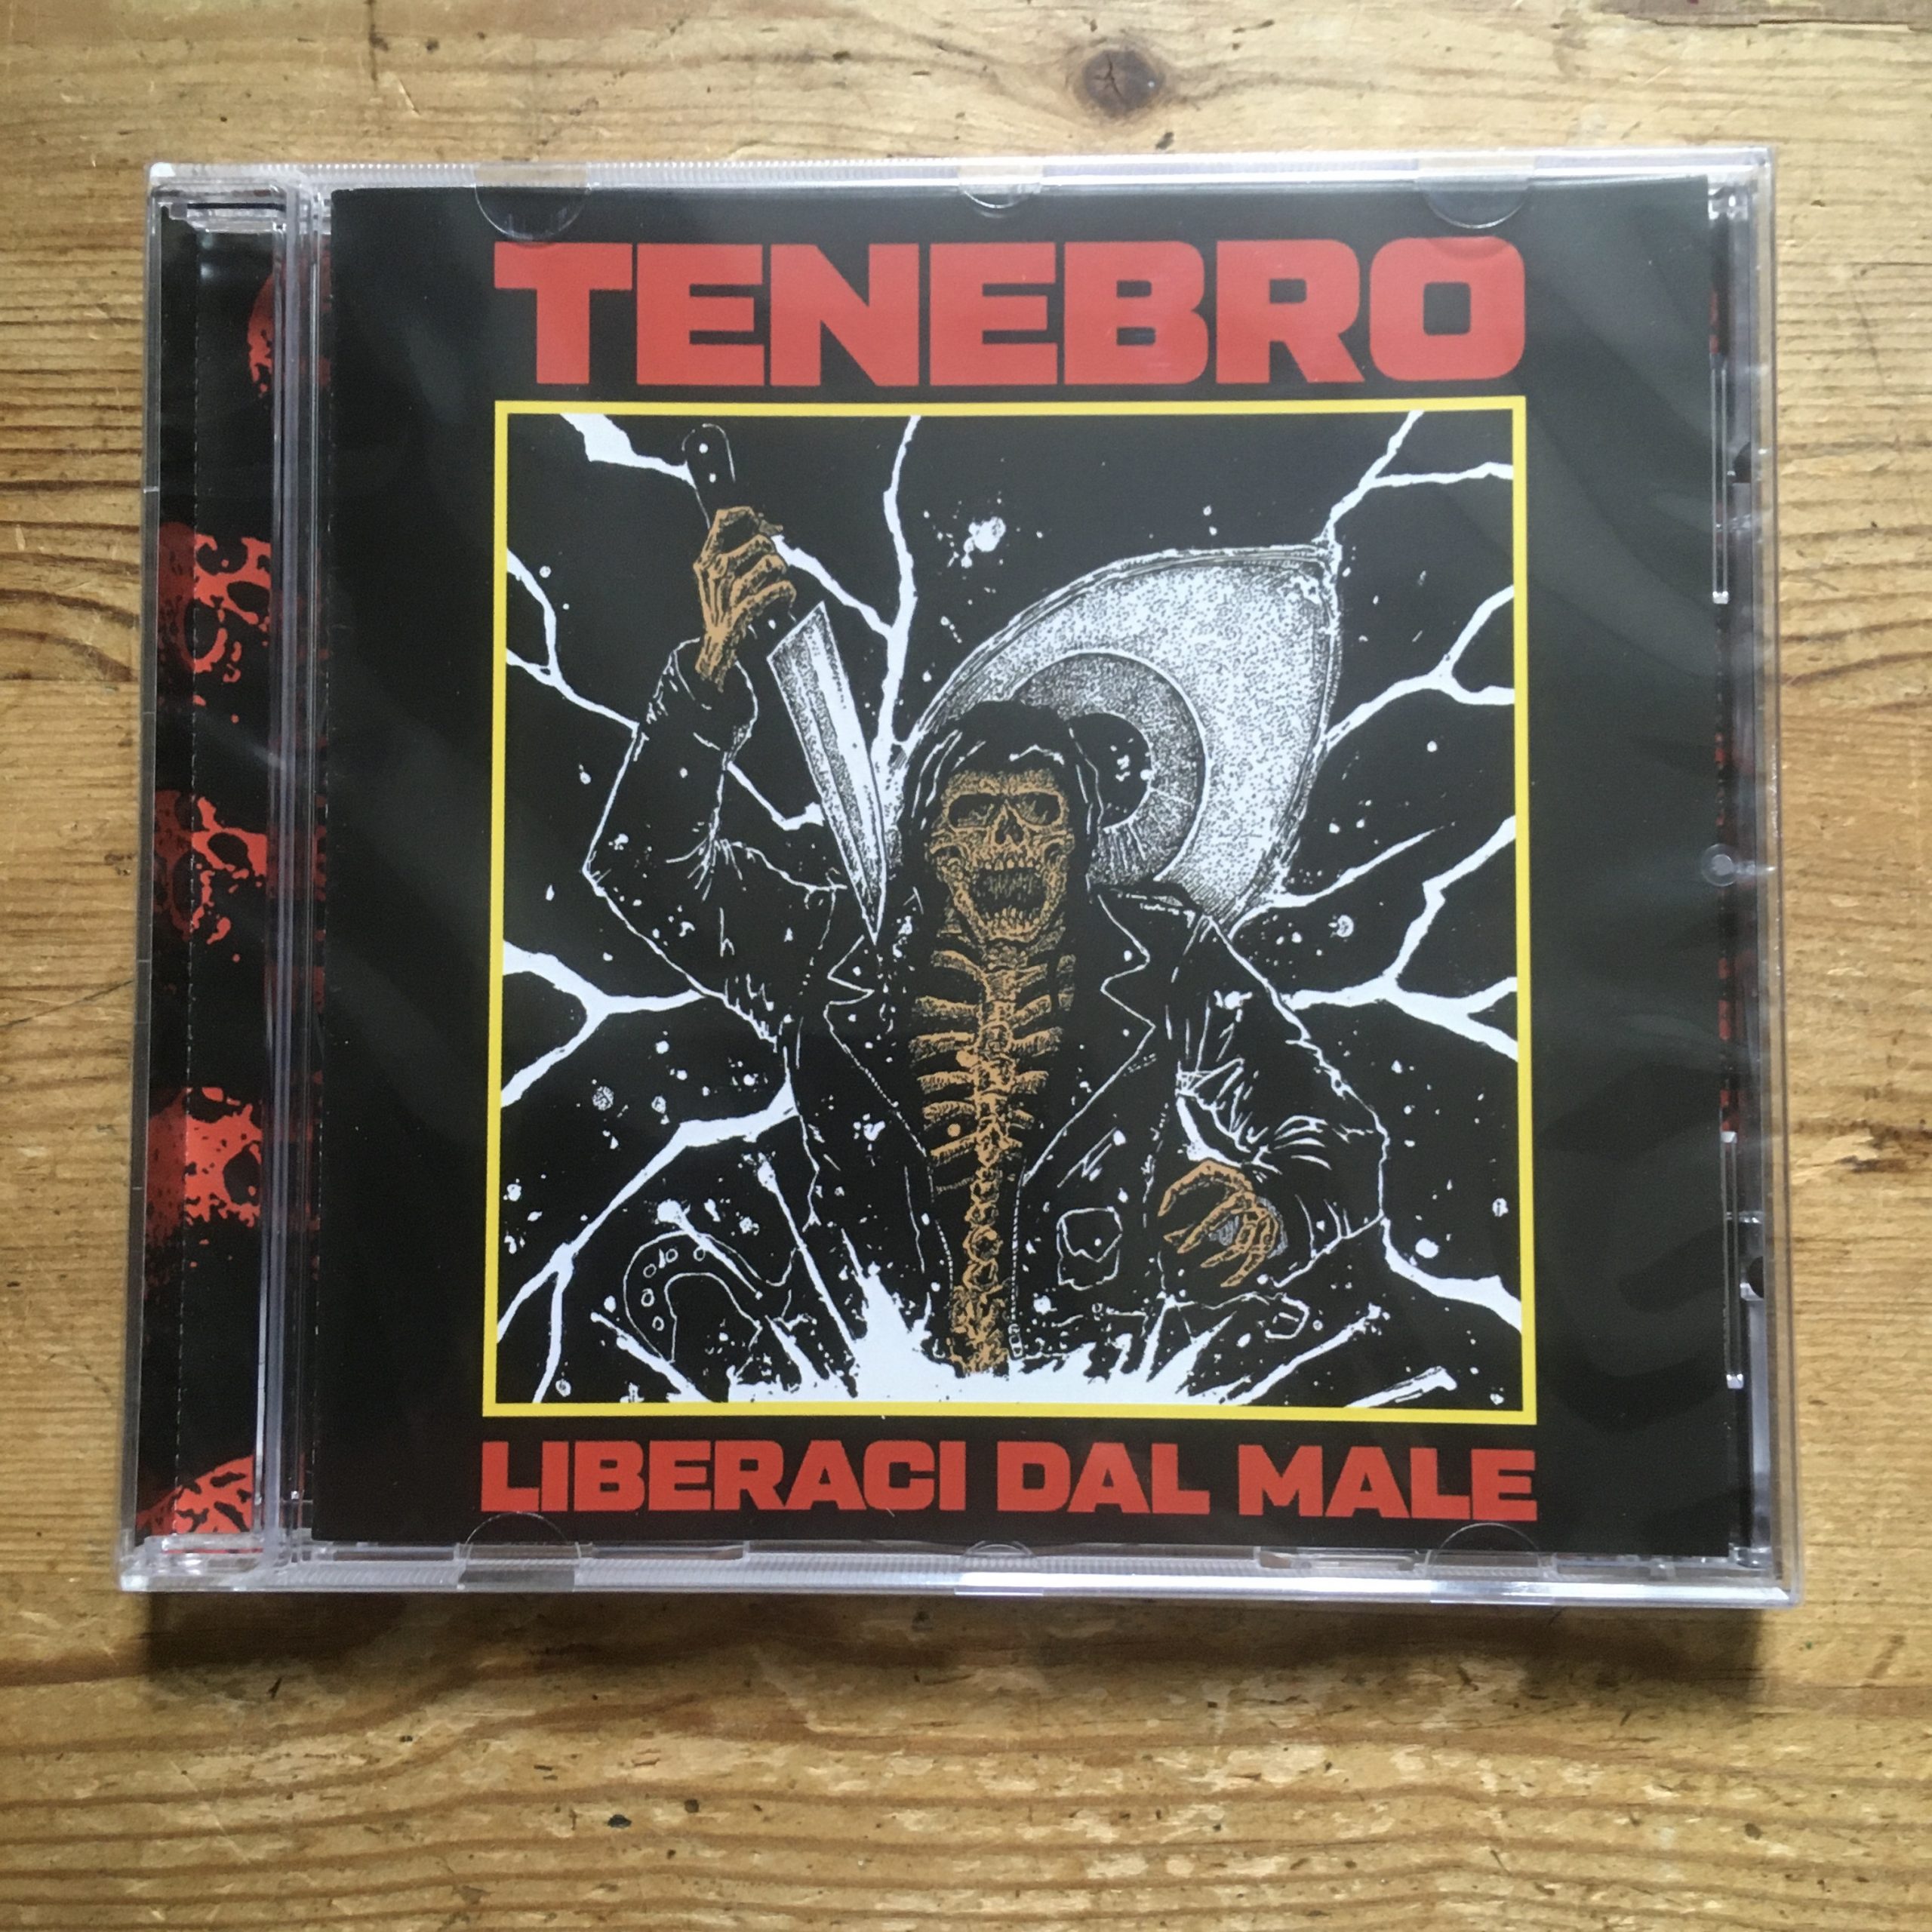 Photo of the Tenebro - "Leberaci Dal Male" MCD